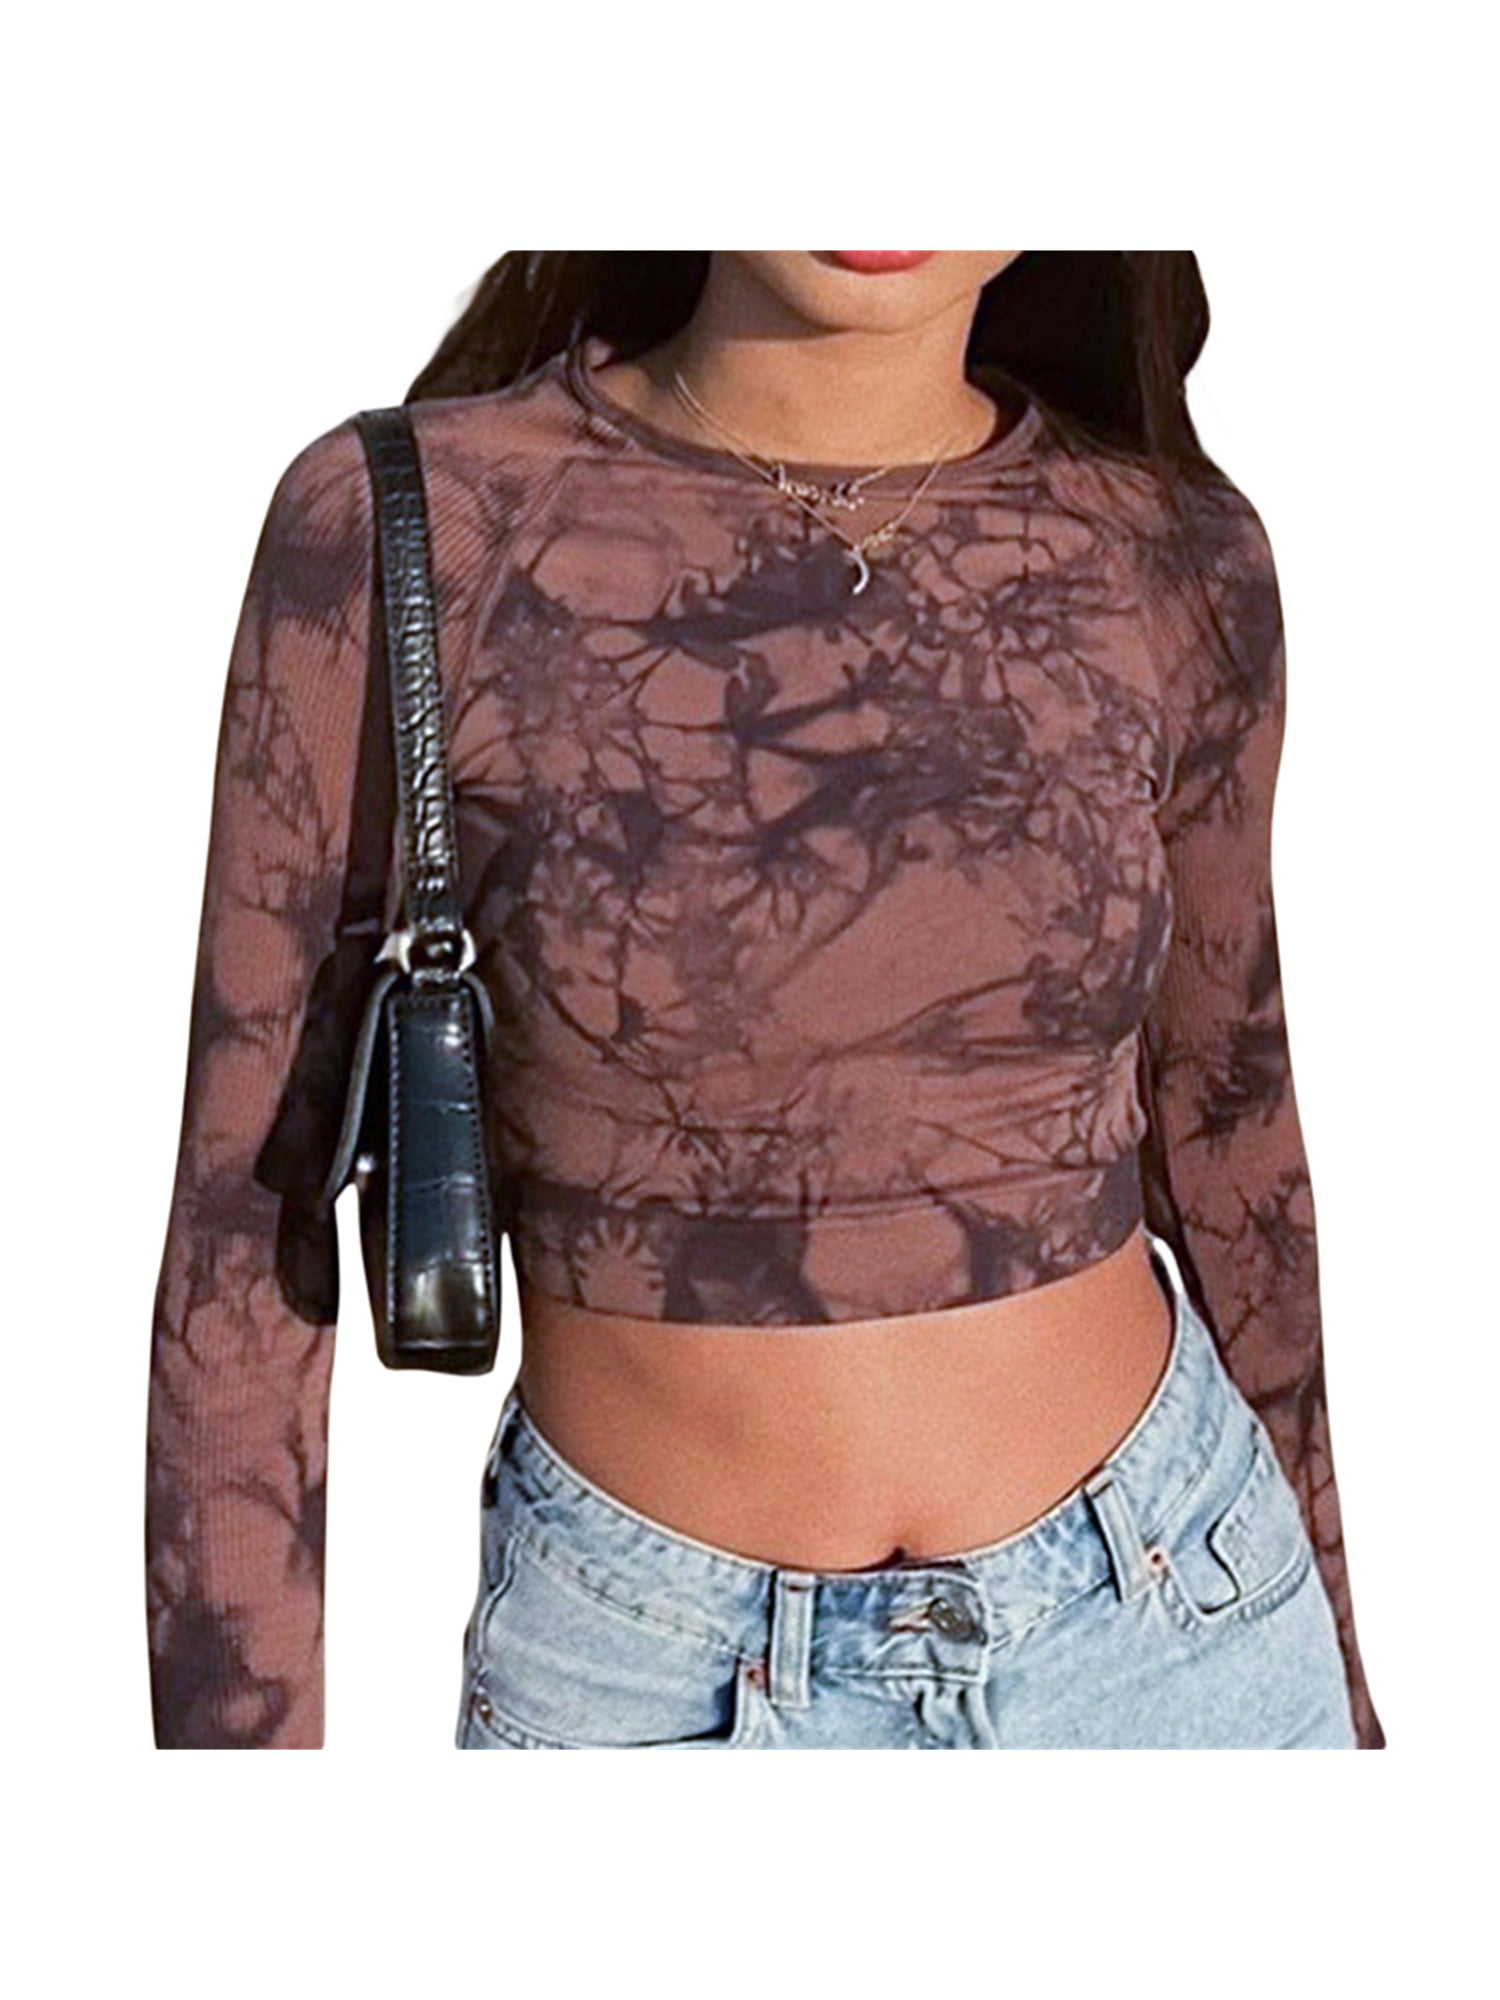 TOPUNDER Women T Shirt Slim Tank Printed Crop Tops Short Sleeve Blouse